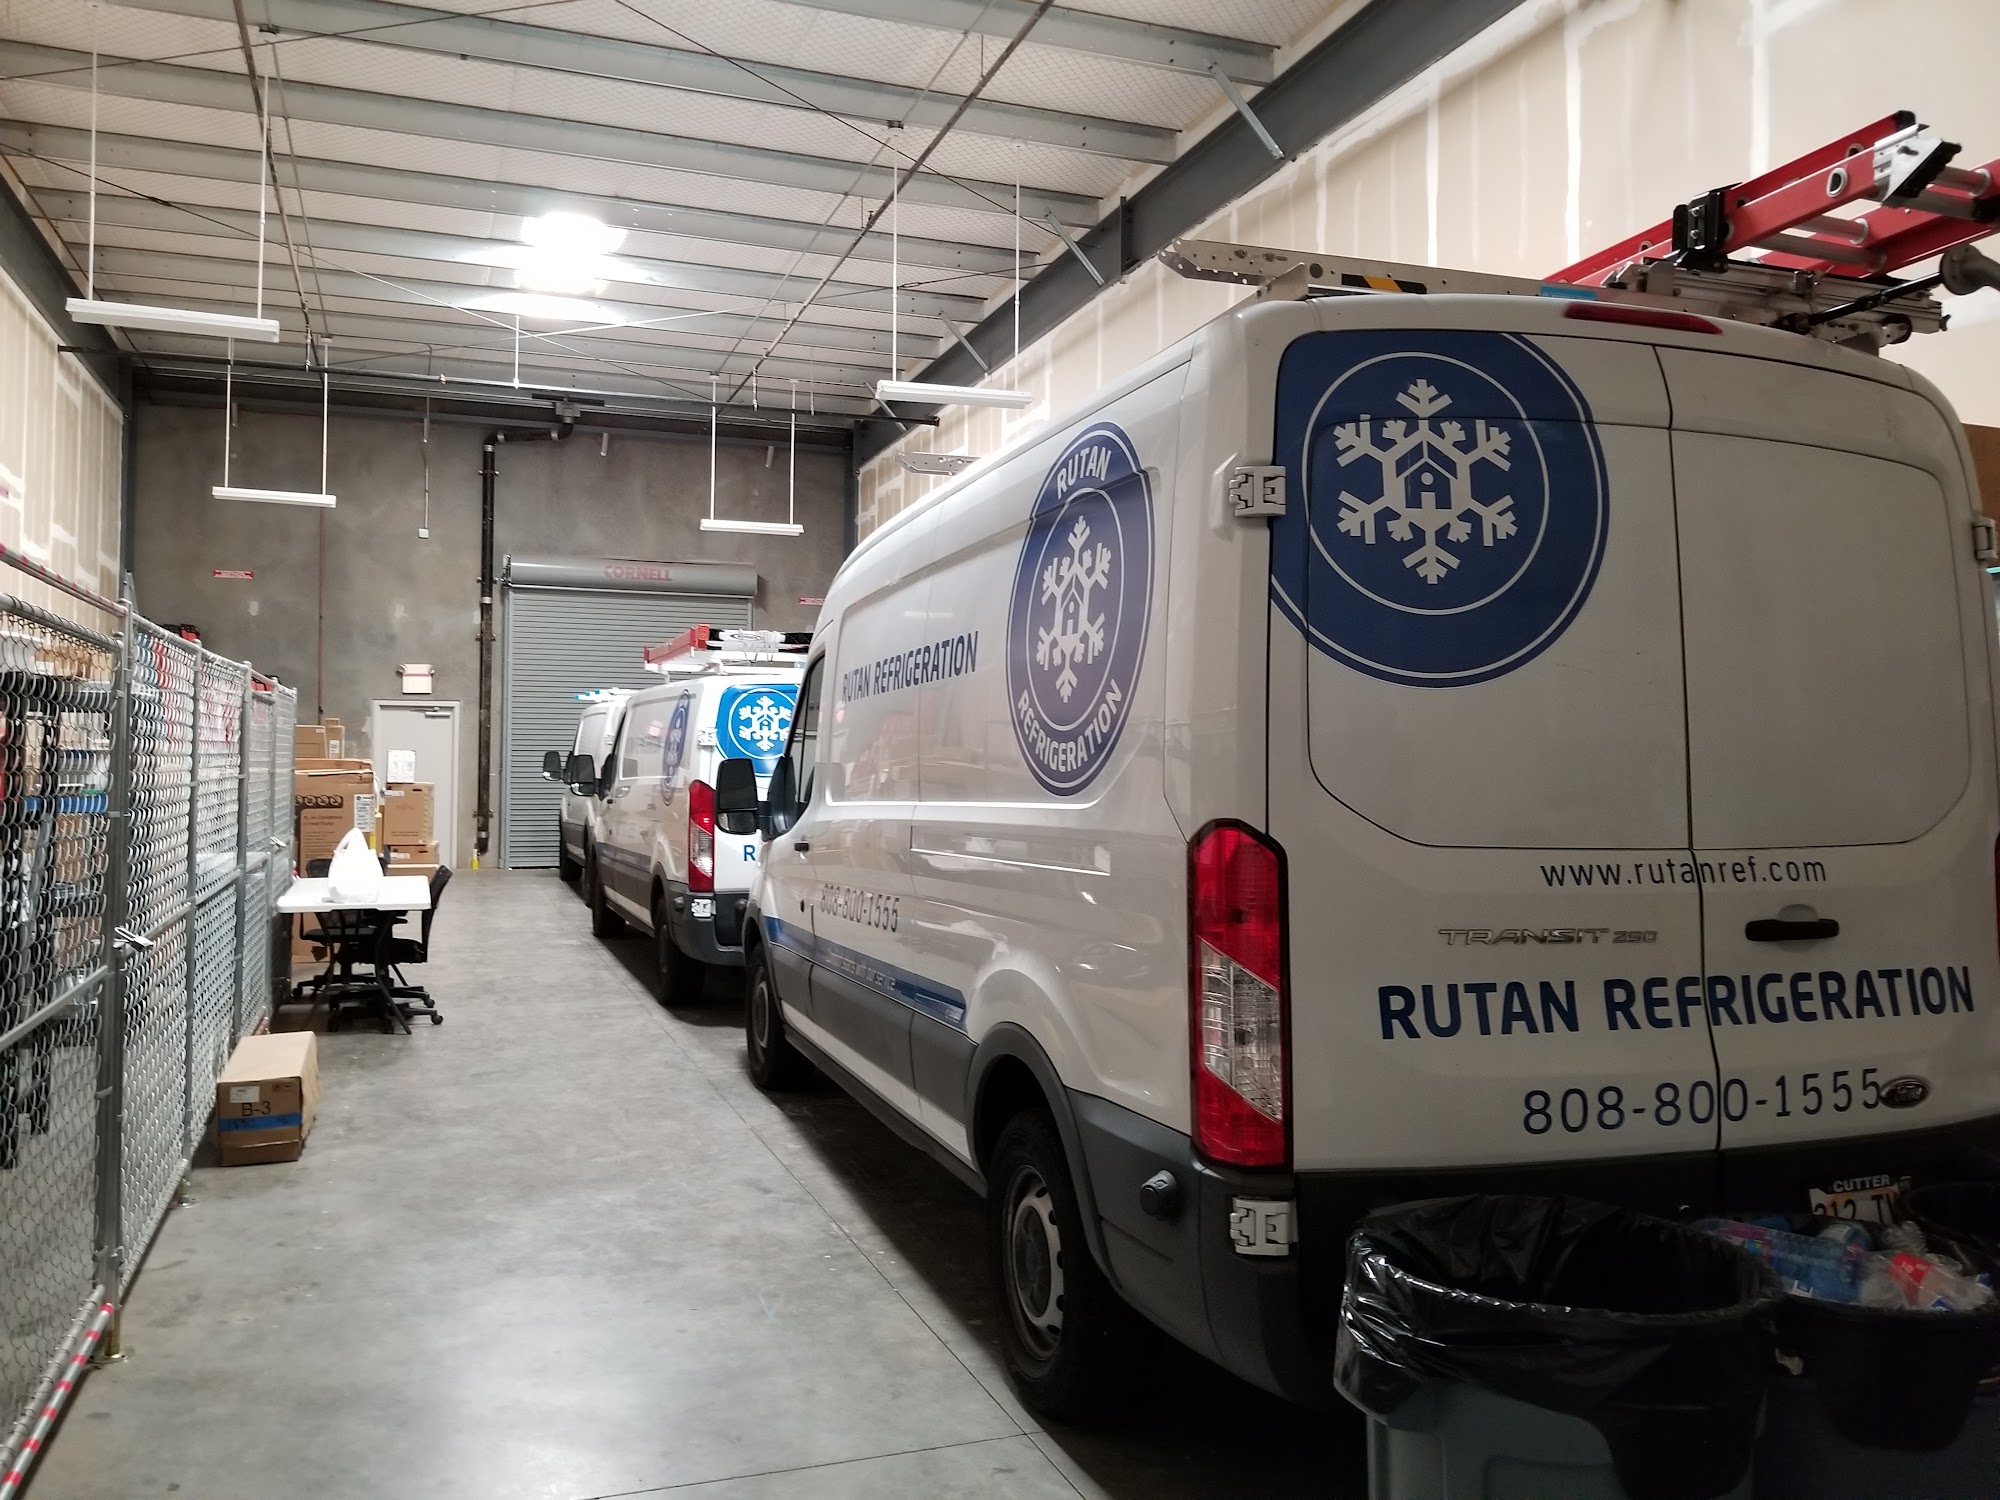 Rutan Refrigeration & Air Conditioning